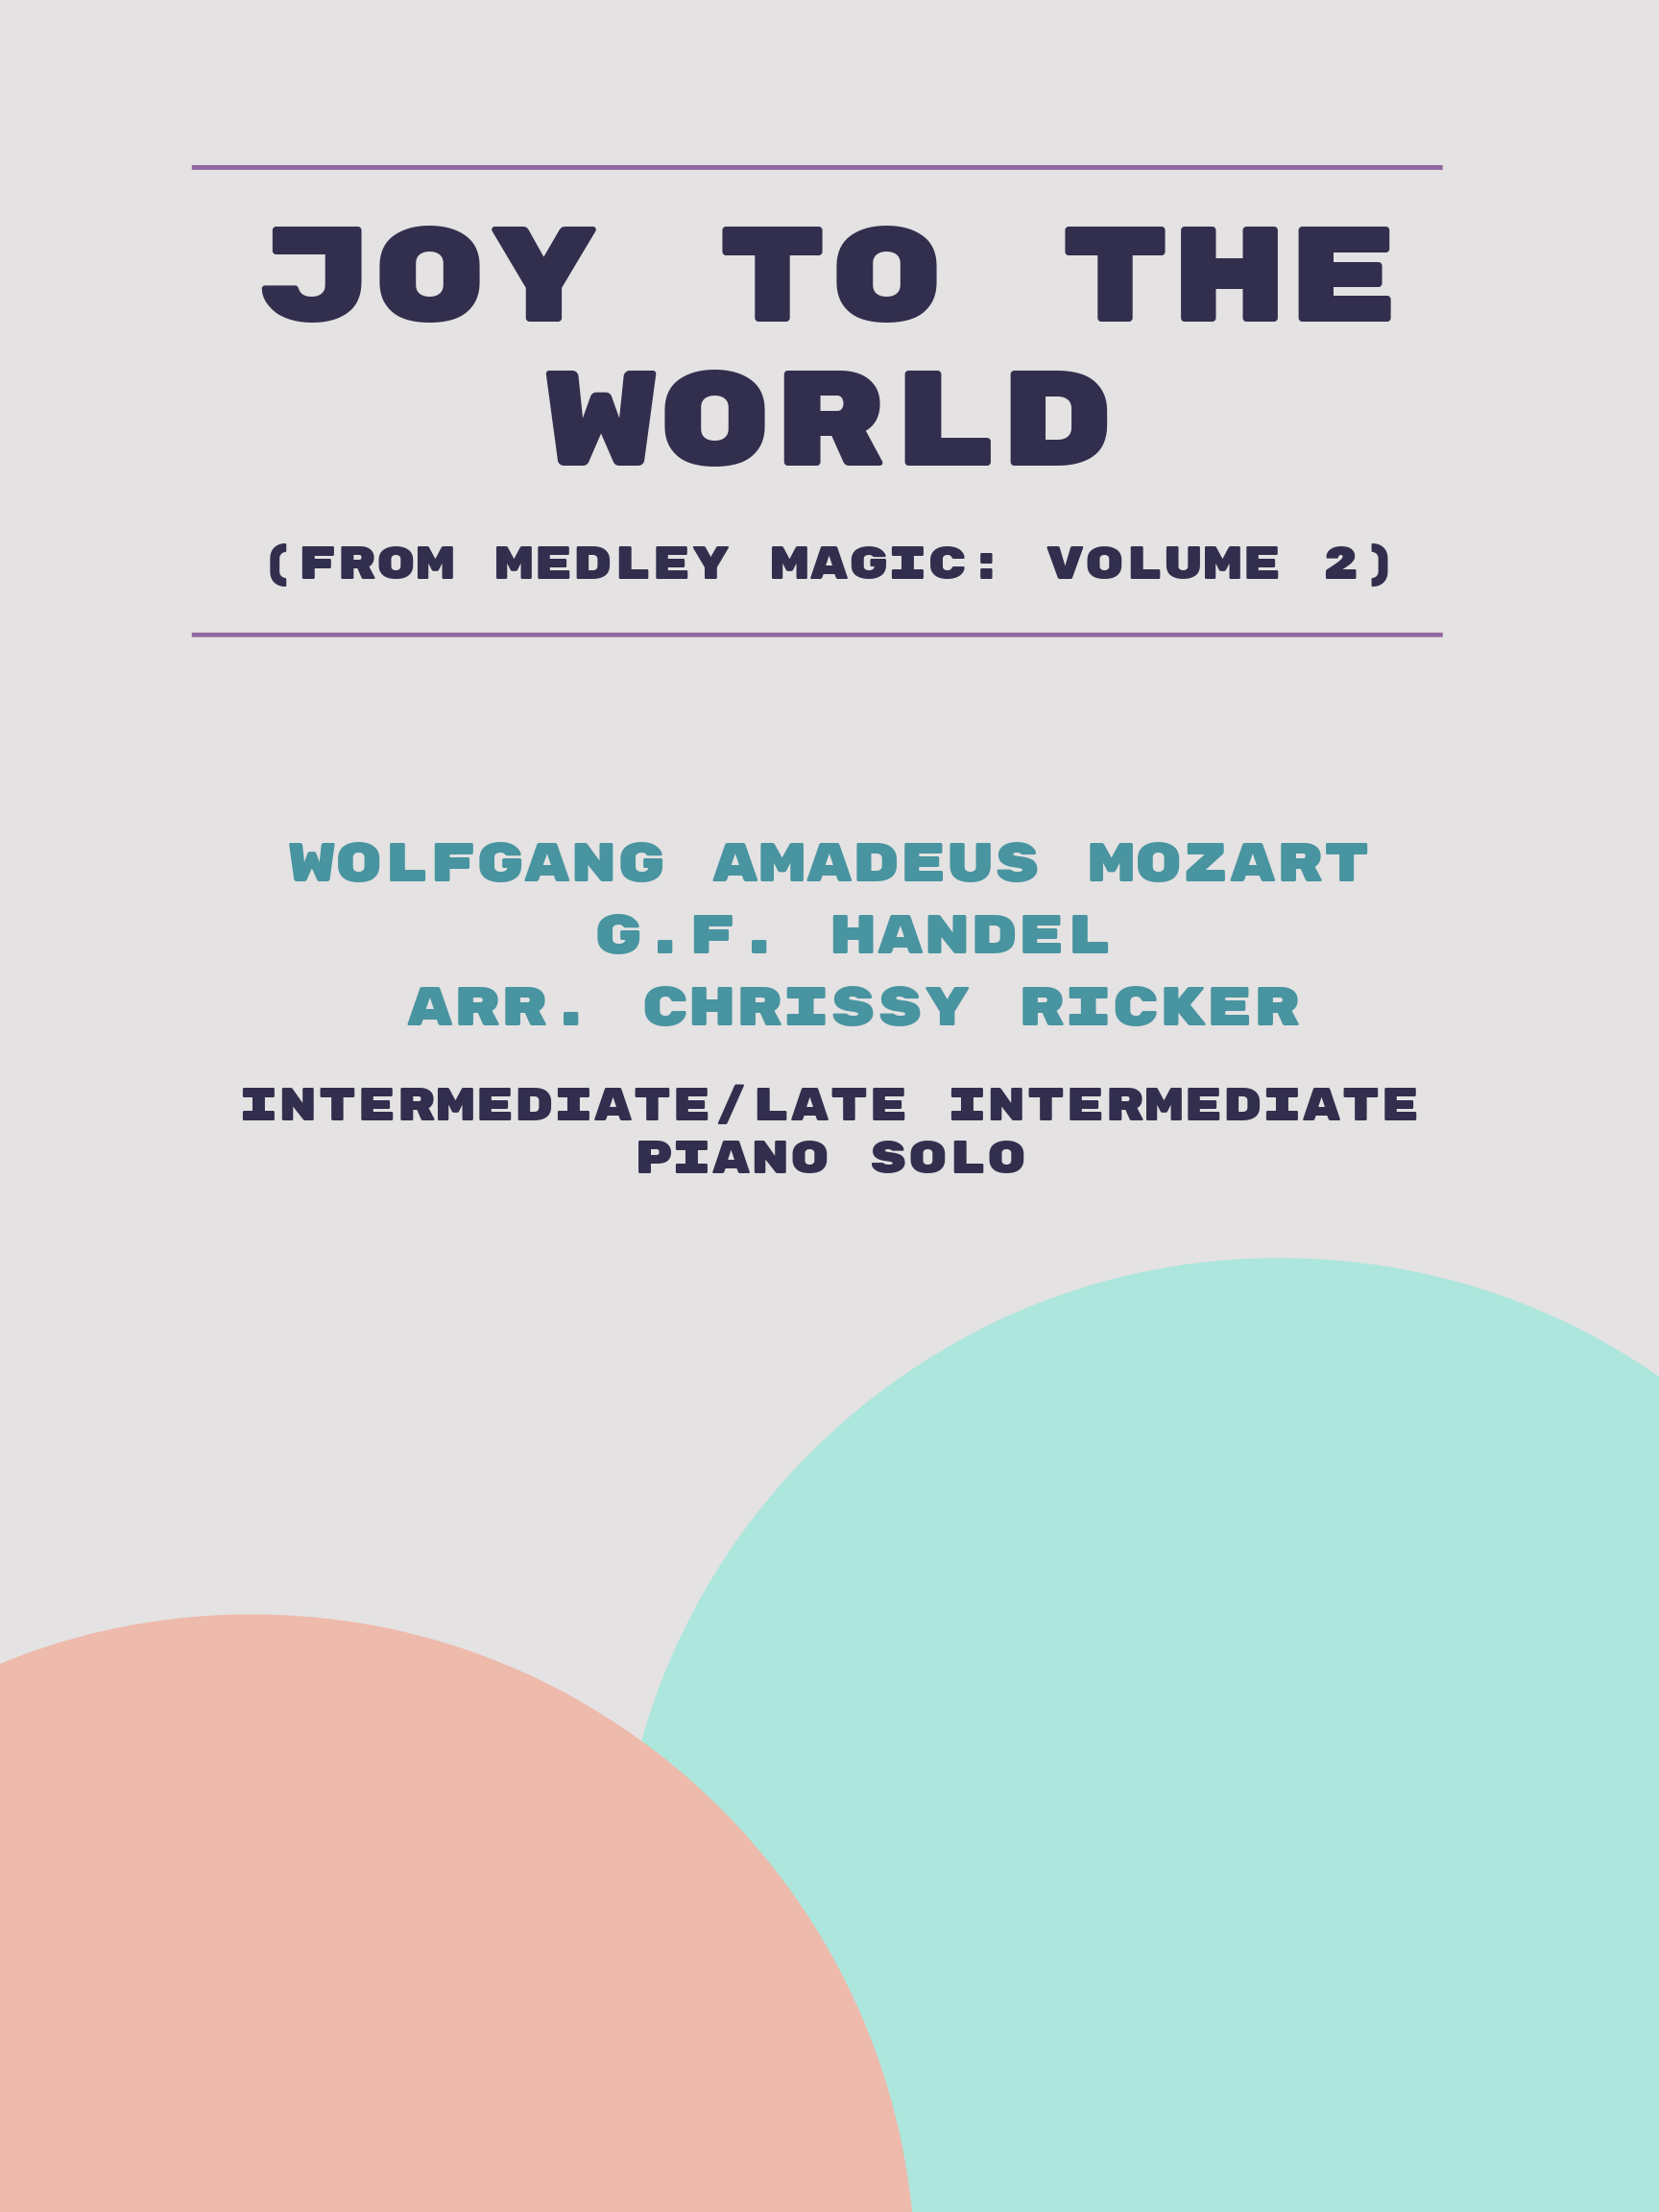 Joy to the World by G.F. Handel, Wolfgang Amadeus Mozart